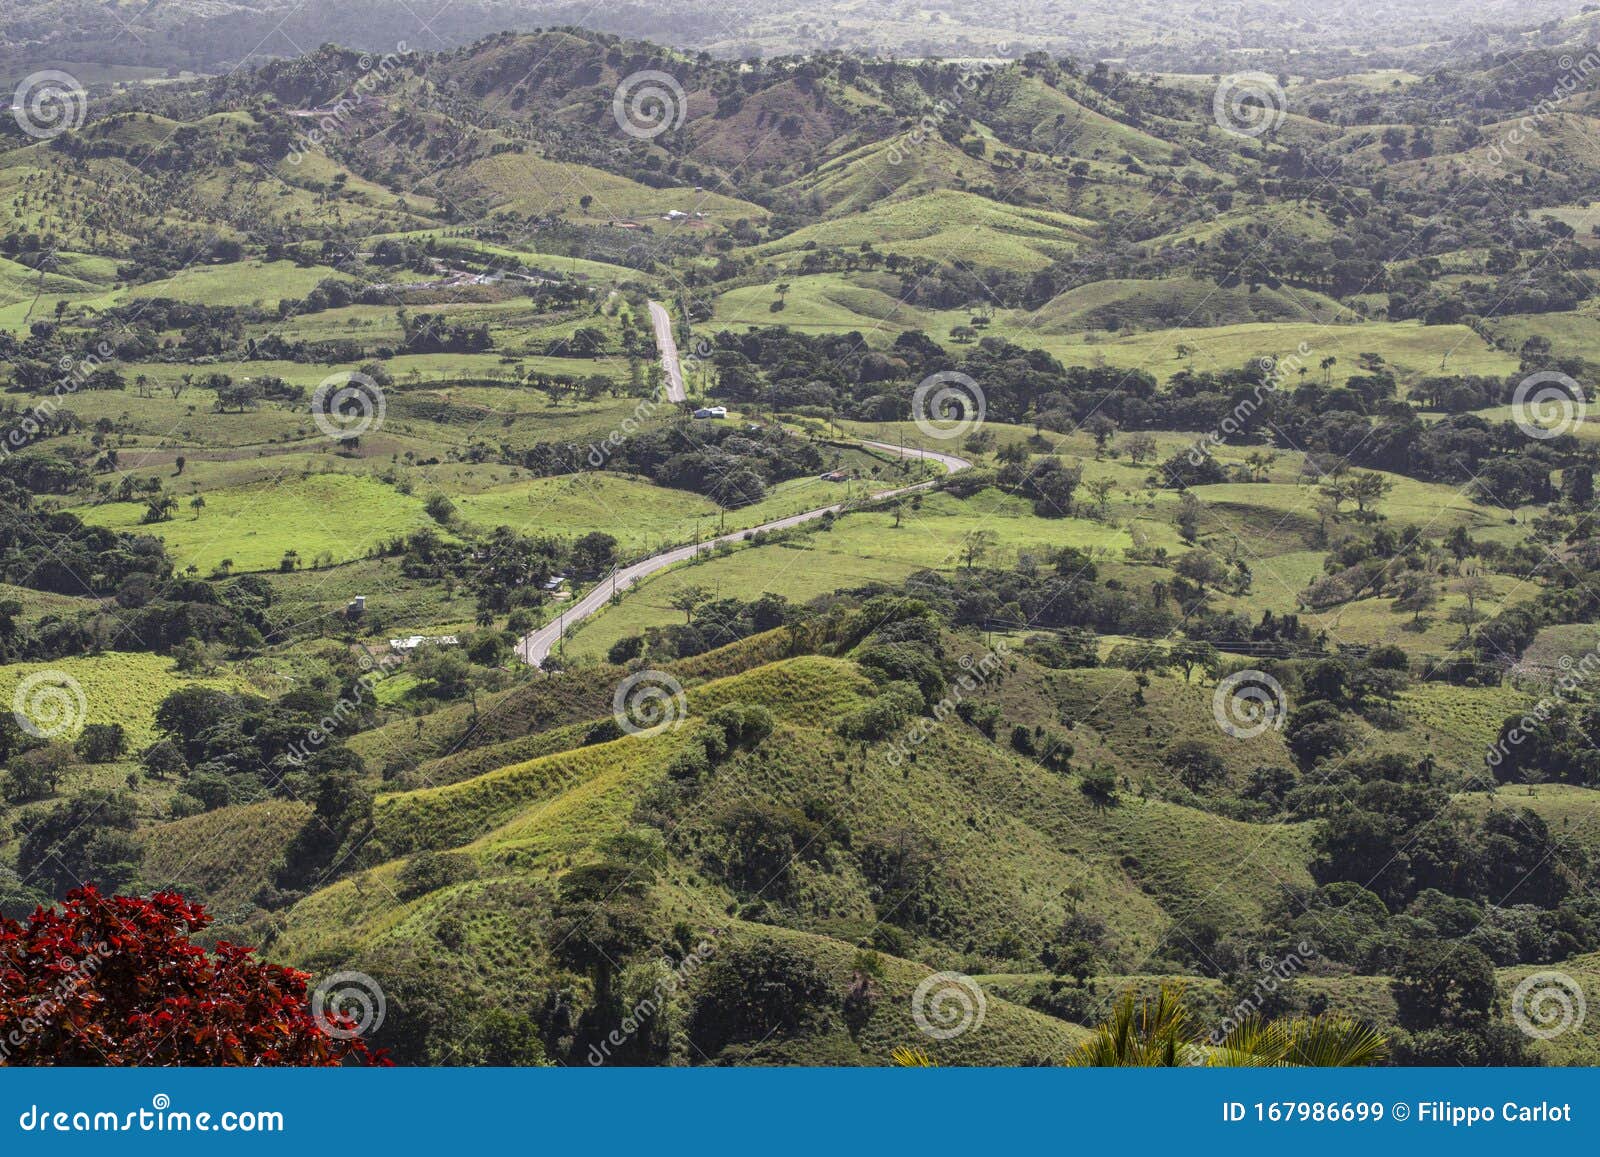 view of montaÃÂ±a redonda in the dominican republic 10